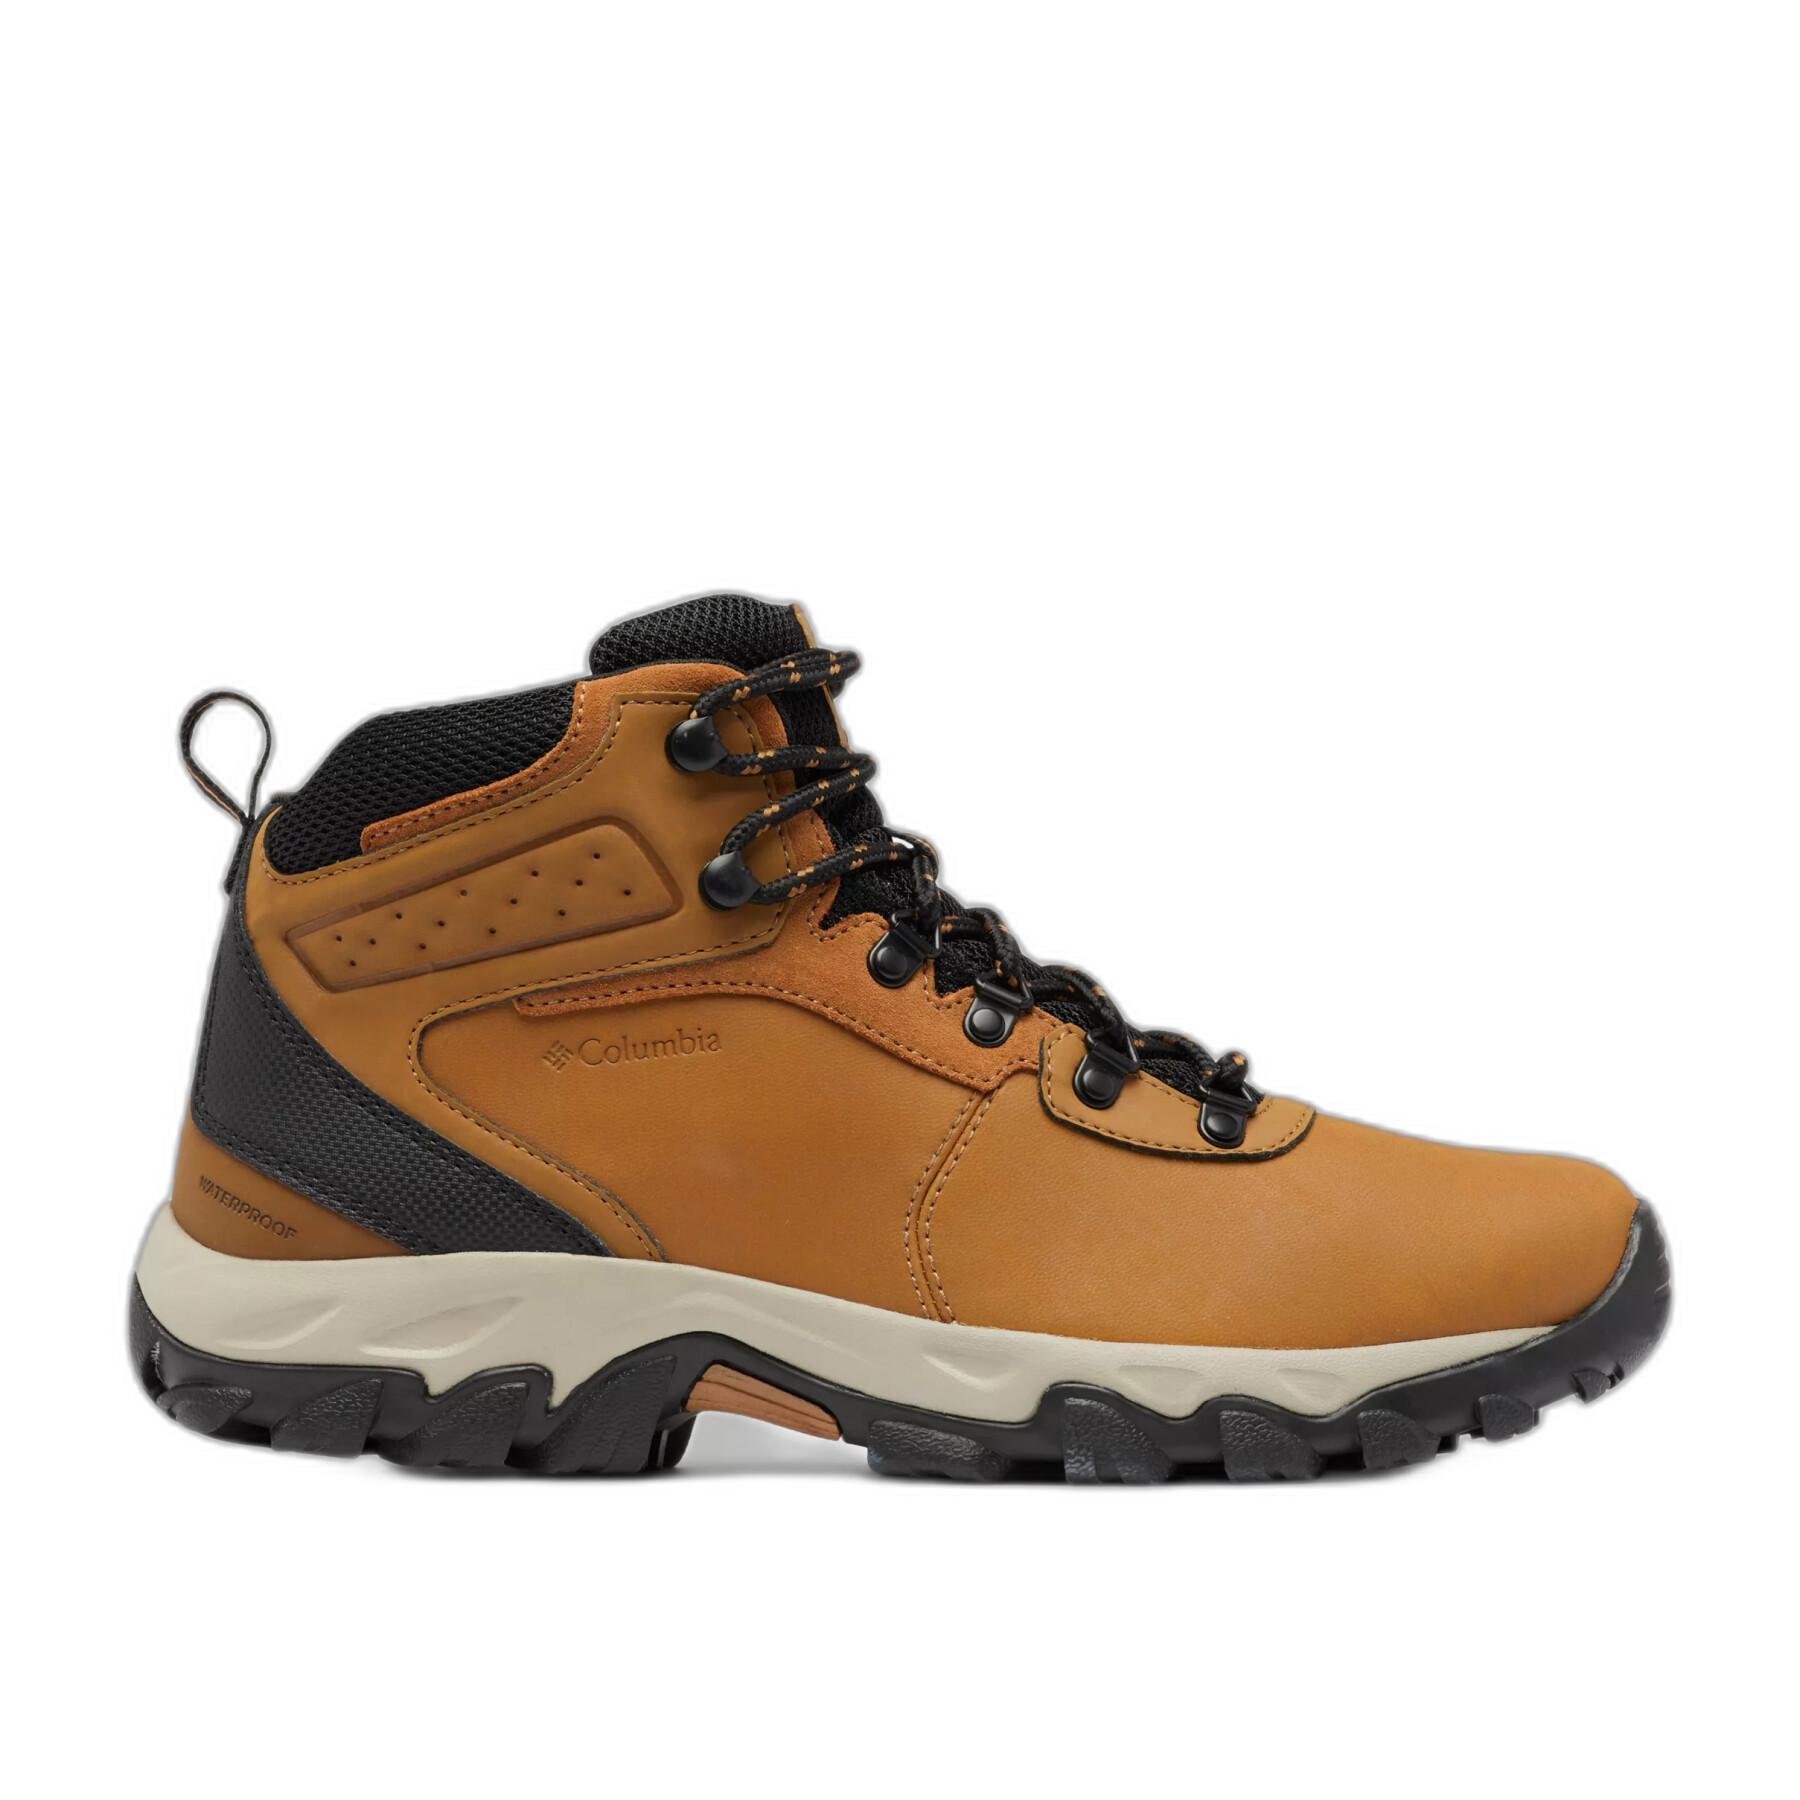 Waterproof hiking shoes Columbia Newton Ridge™ Plus II